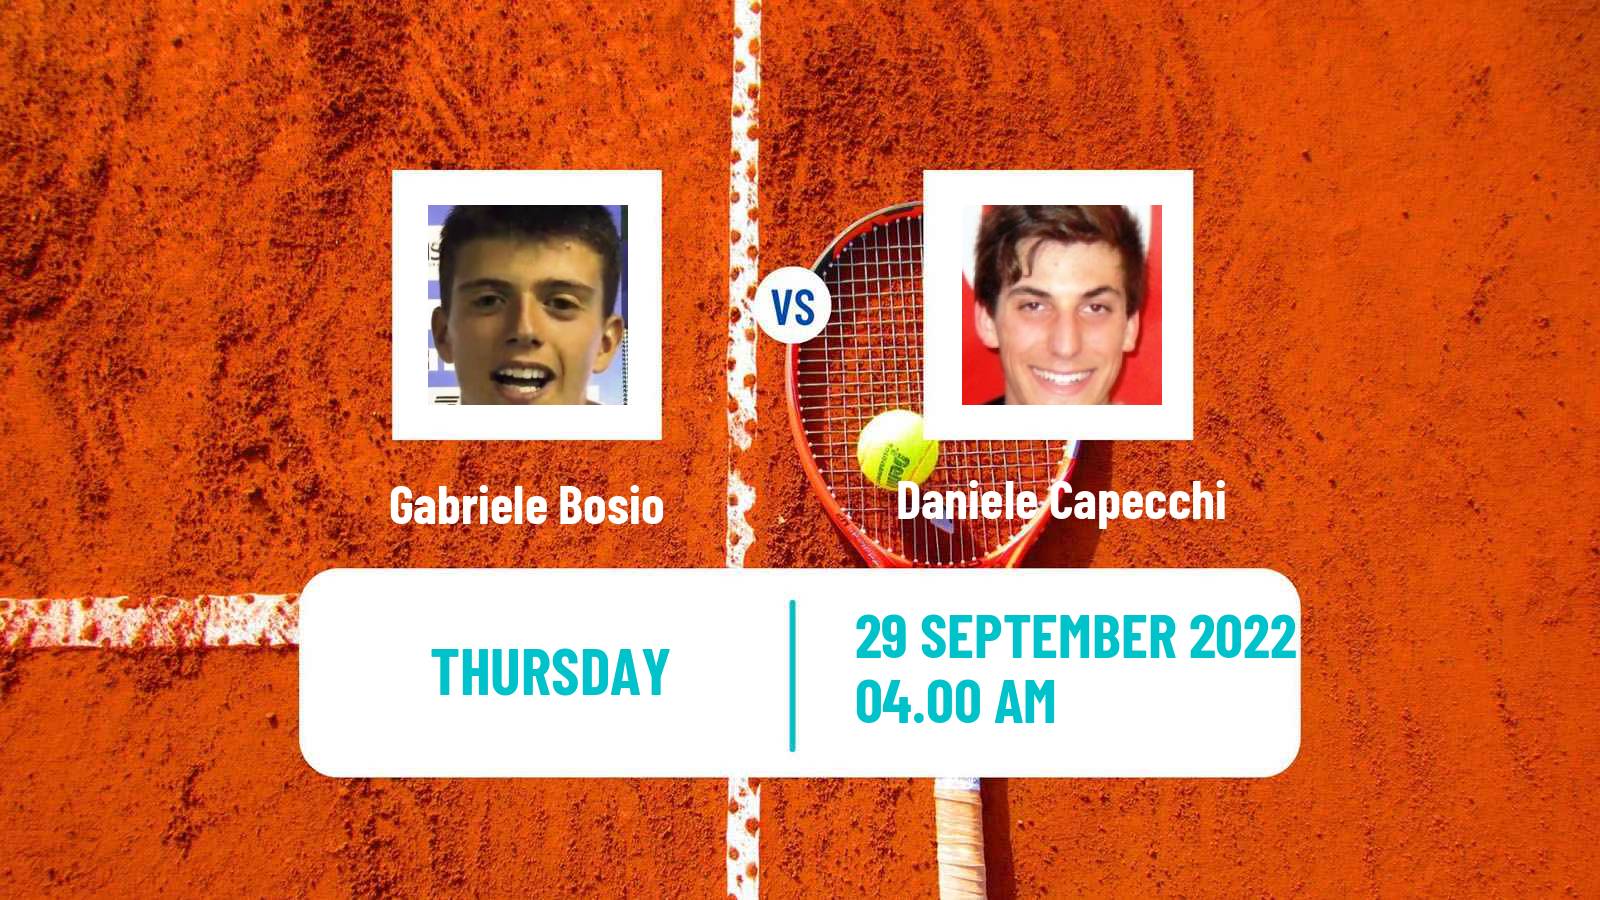 Tennis ITF Tournaments Gabriele Bosio - Daniele Capecchi